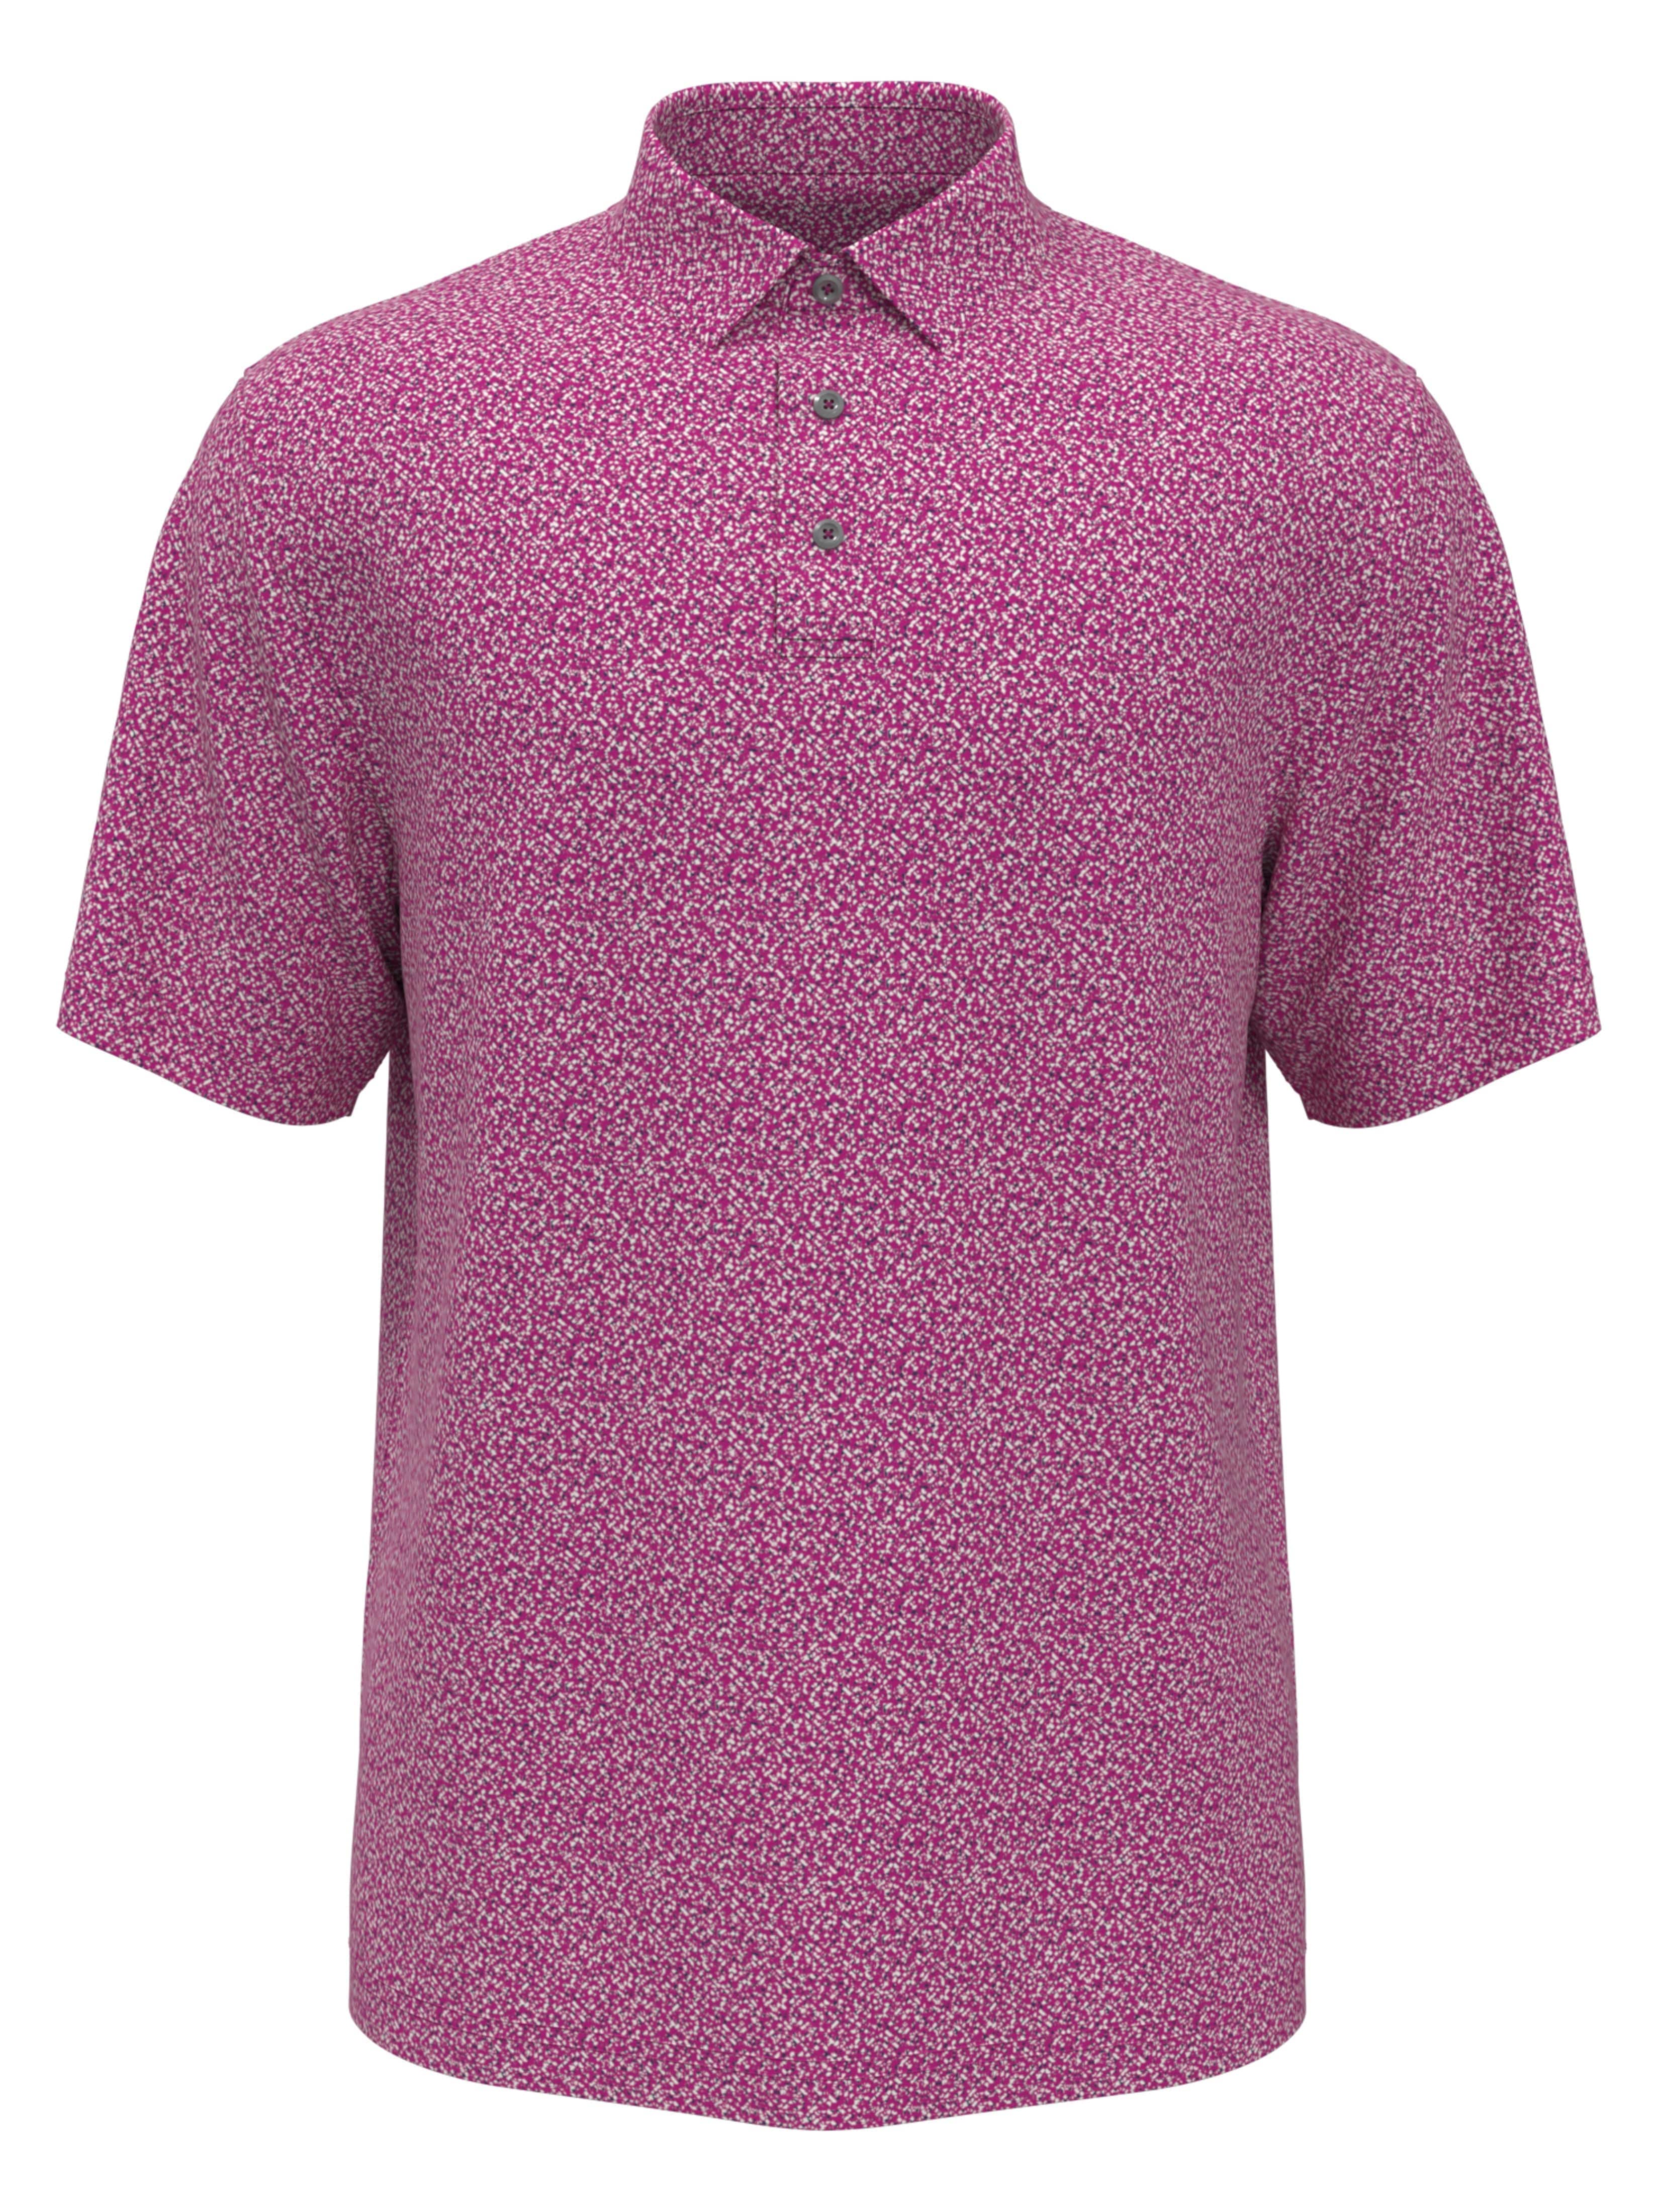 PGA TOUR Apparel Boys Micro Geo Printed Golf Polo Shirt, Size Large, Rose Violet Pink, 100% Polyester | Golf Apparel Shop